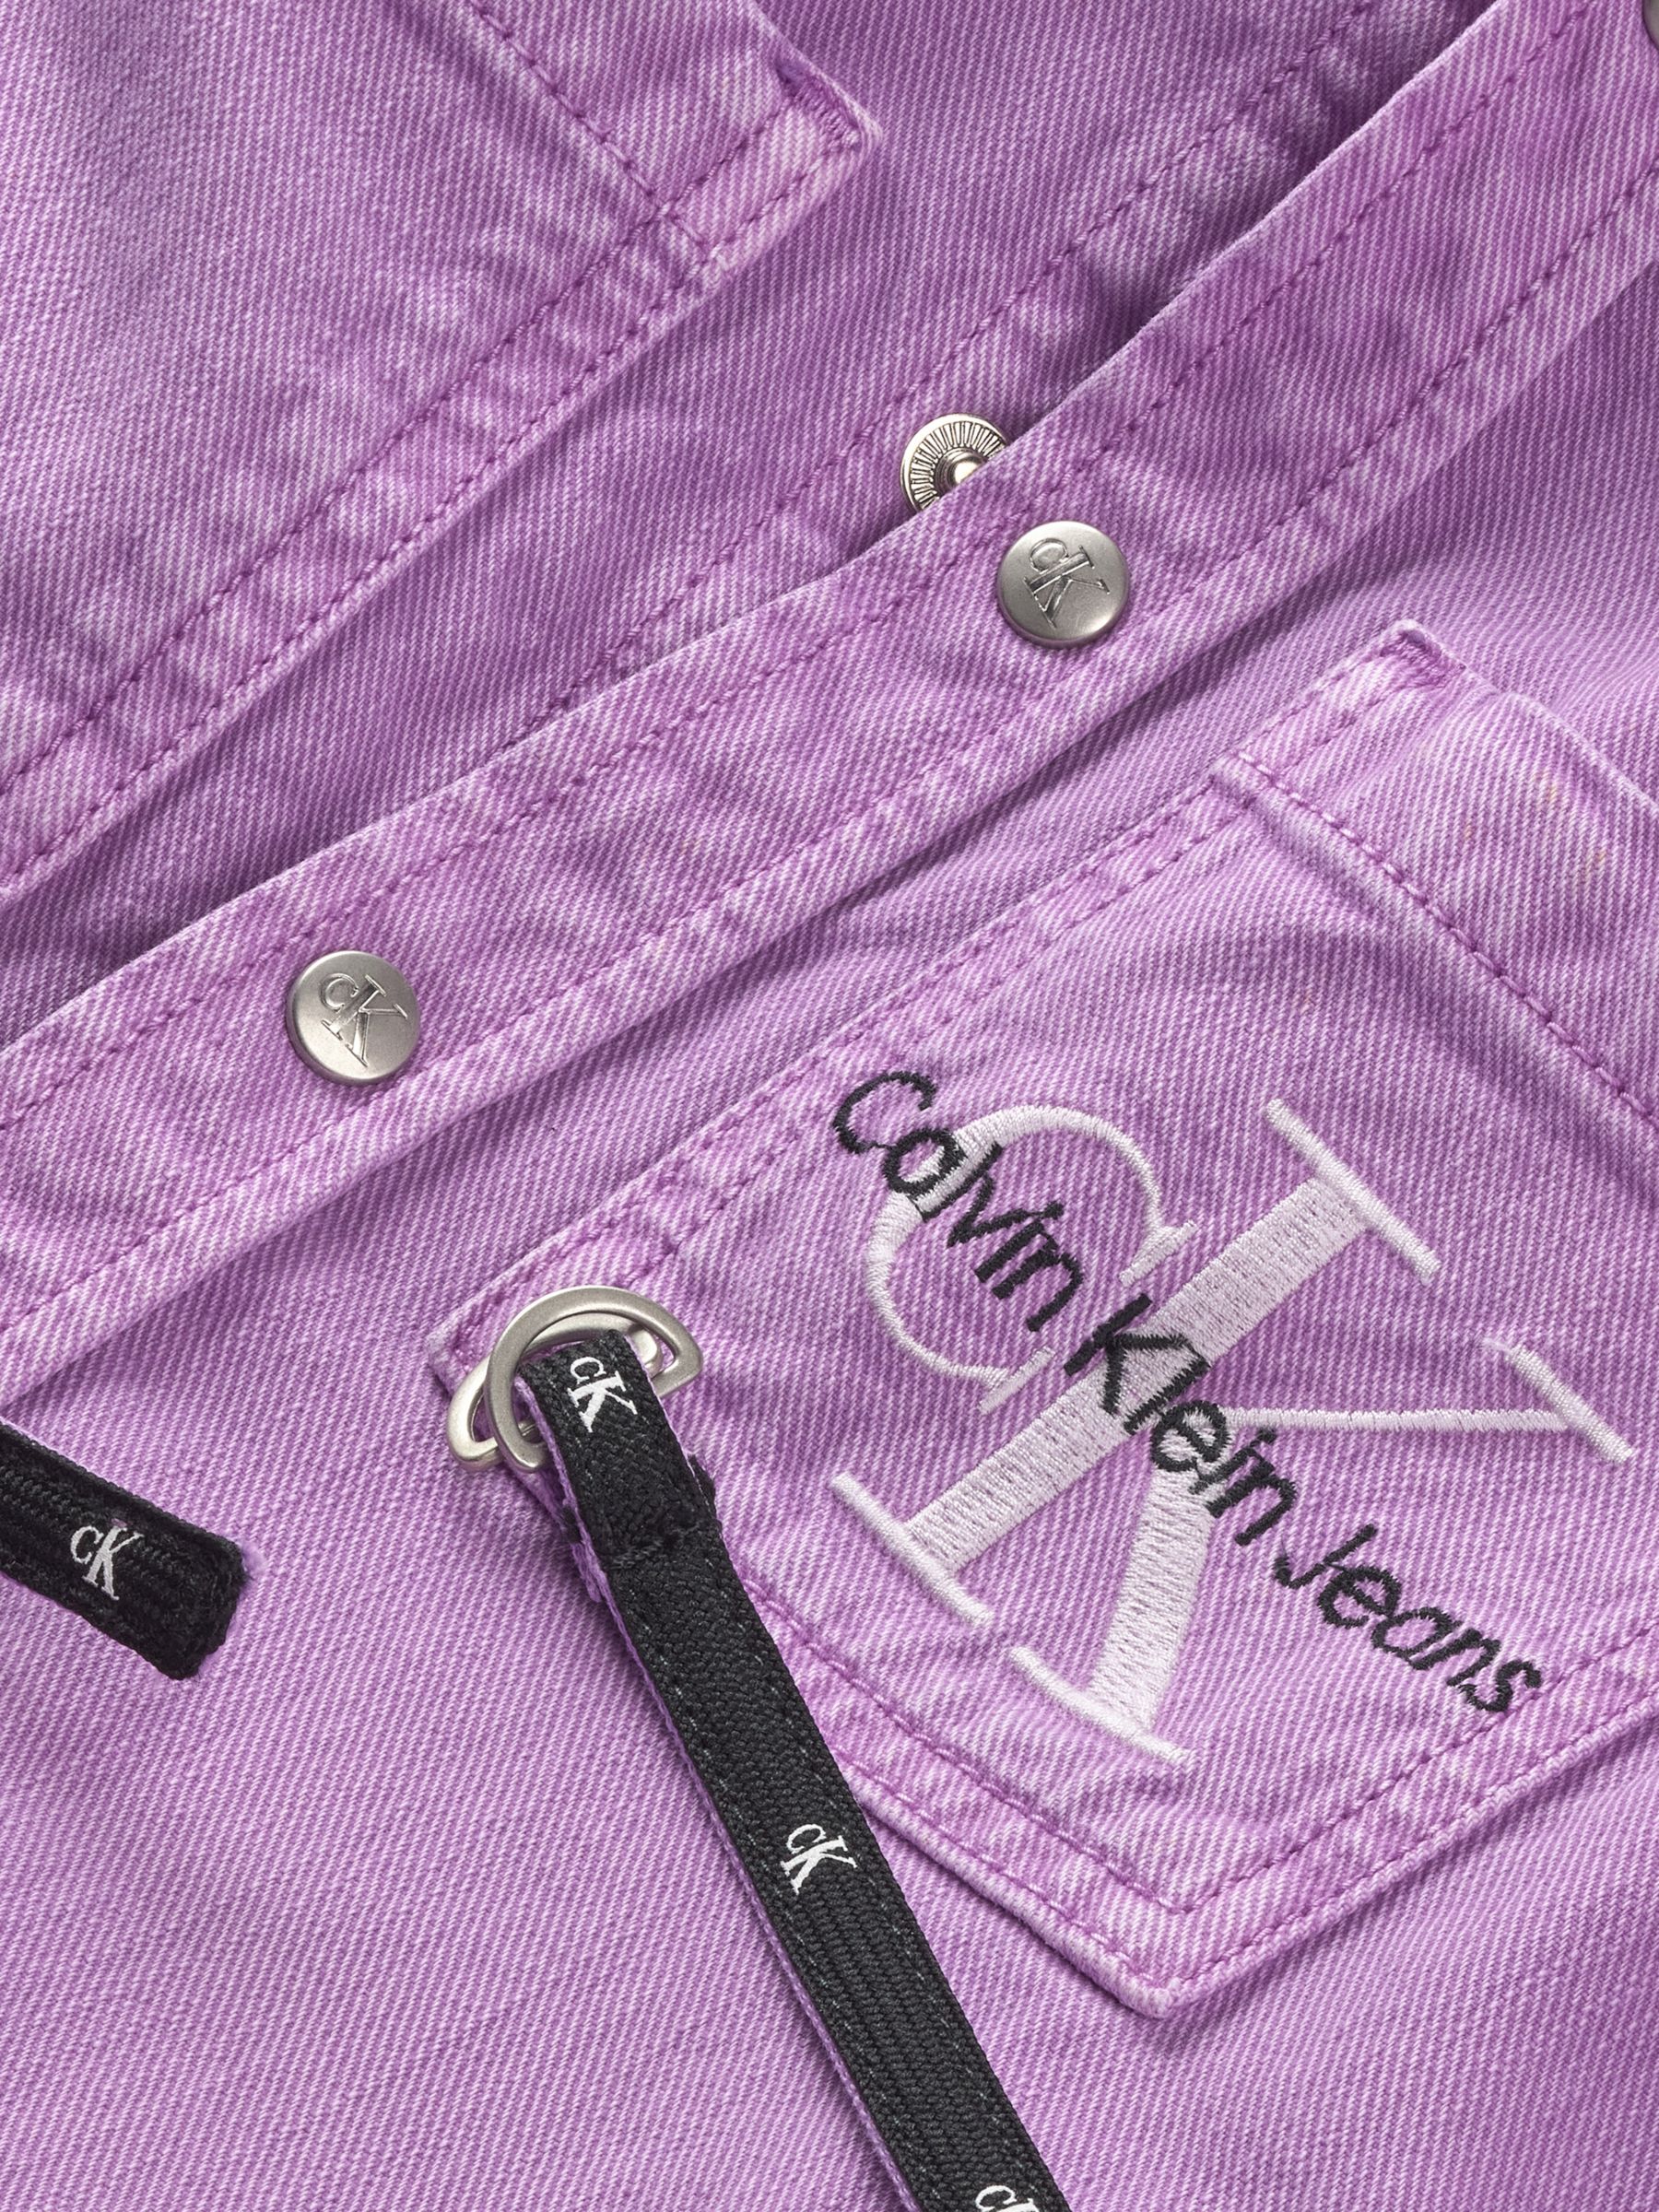 Calvin Klein Kids' Cotton Shirt Dress, Iris Orchid, 4 years